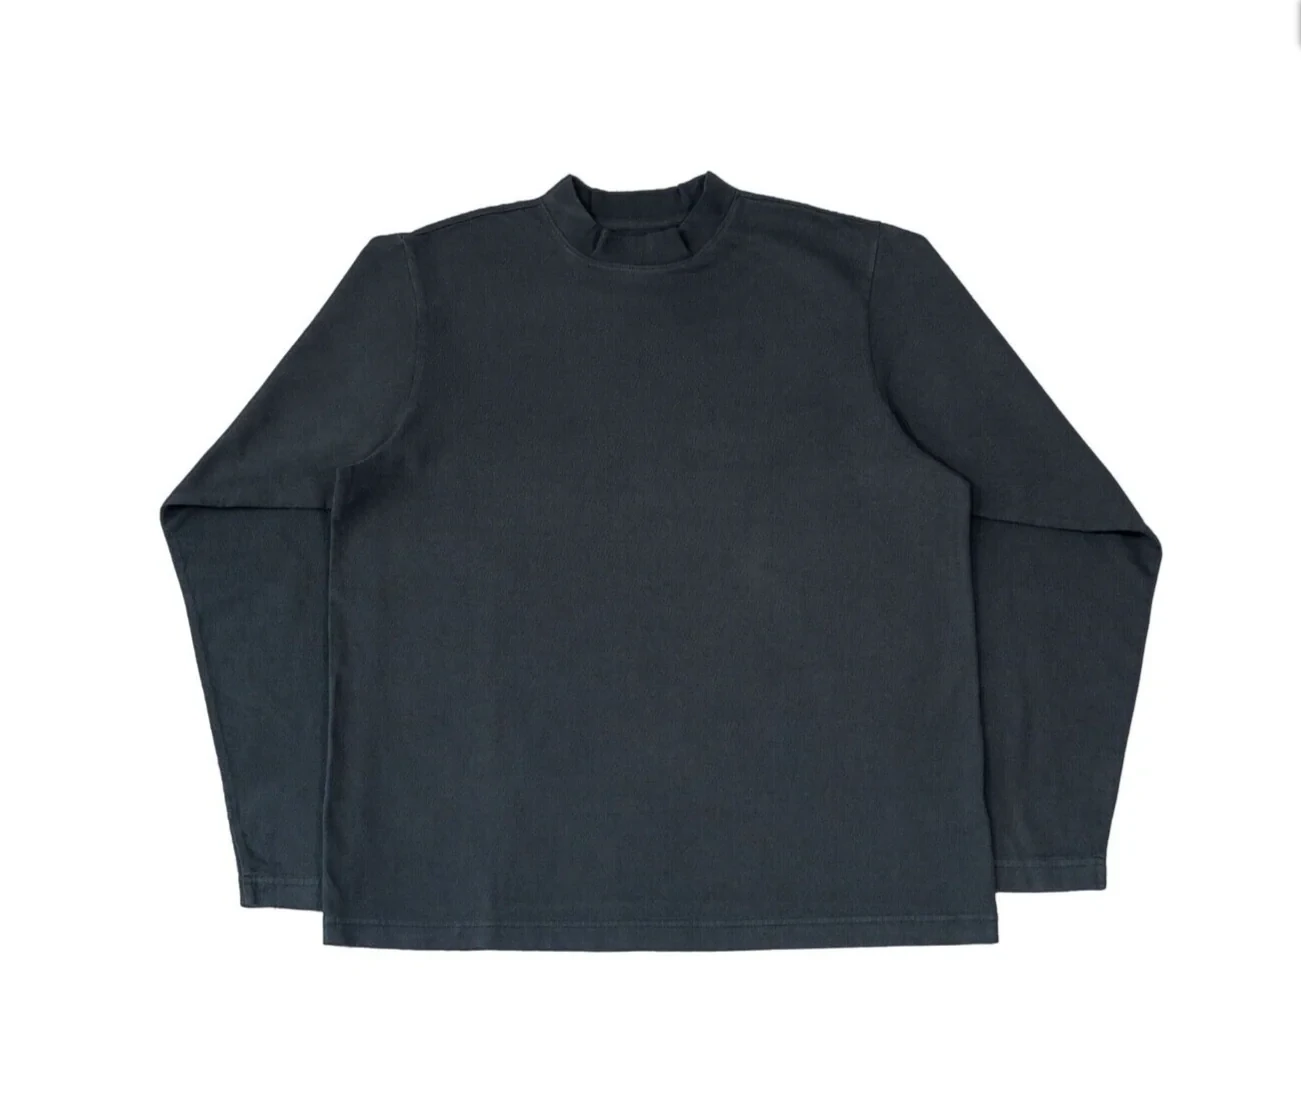 Yzy x Gap L/S T-Shirt Black Size Large